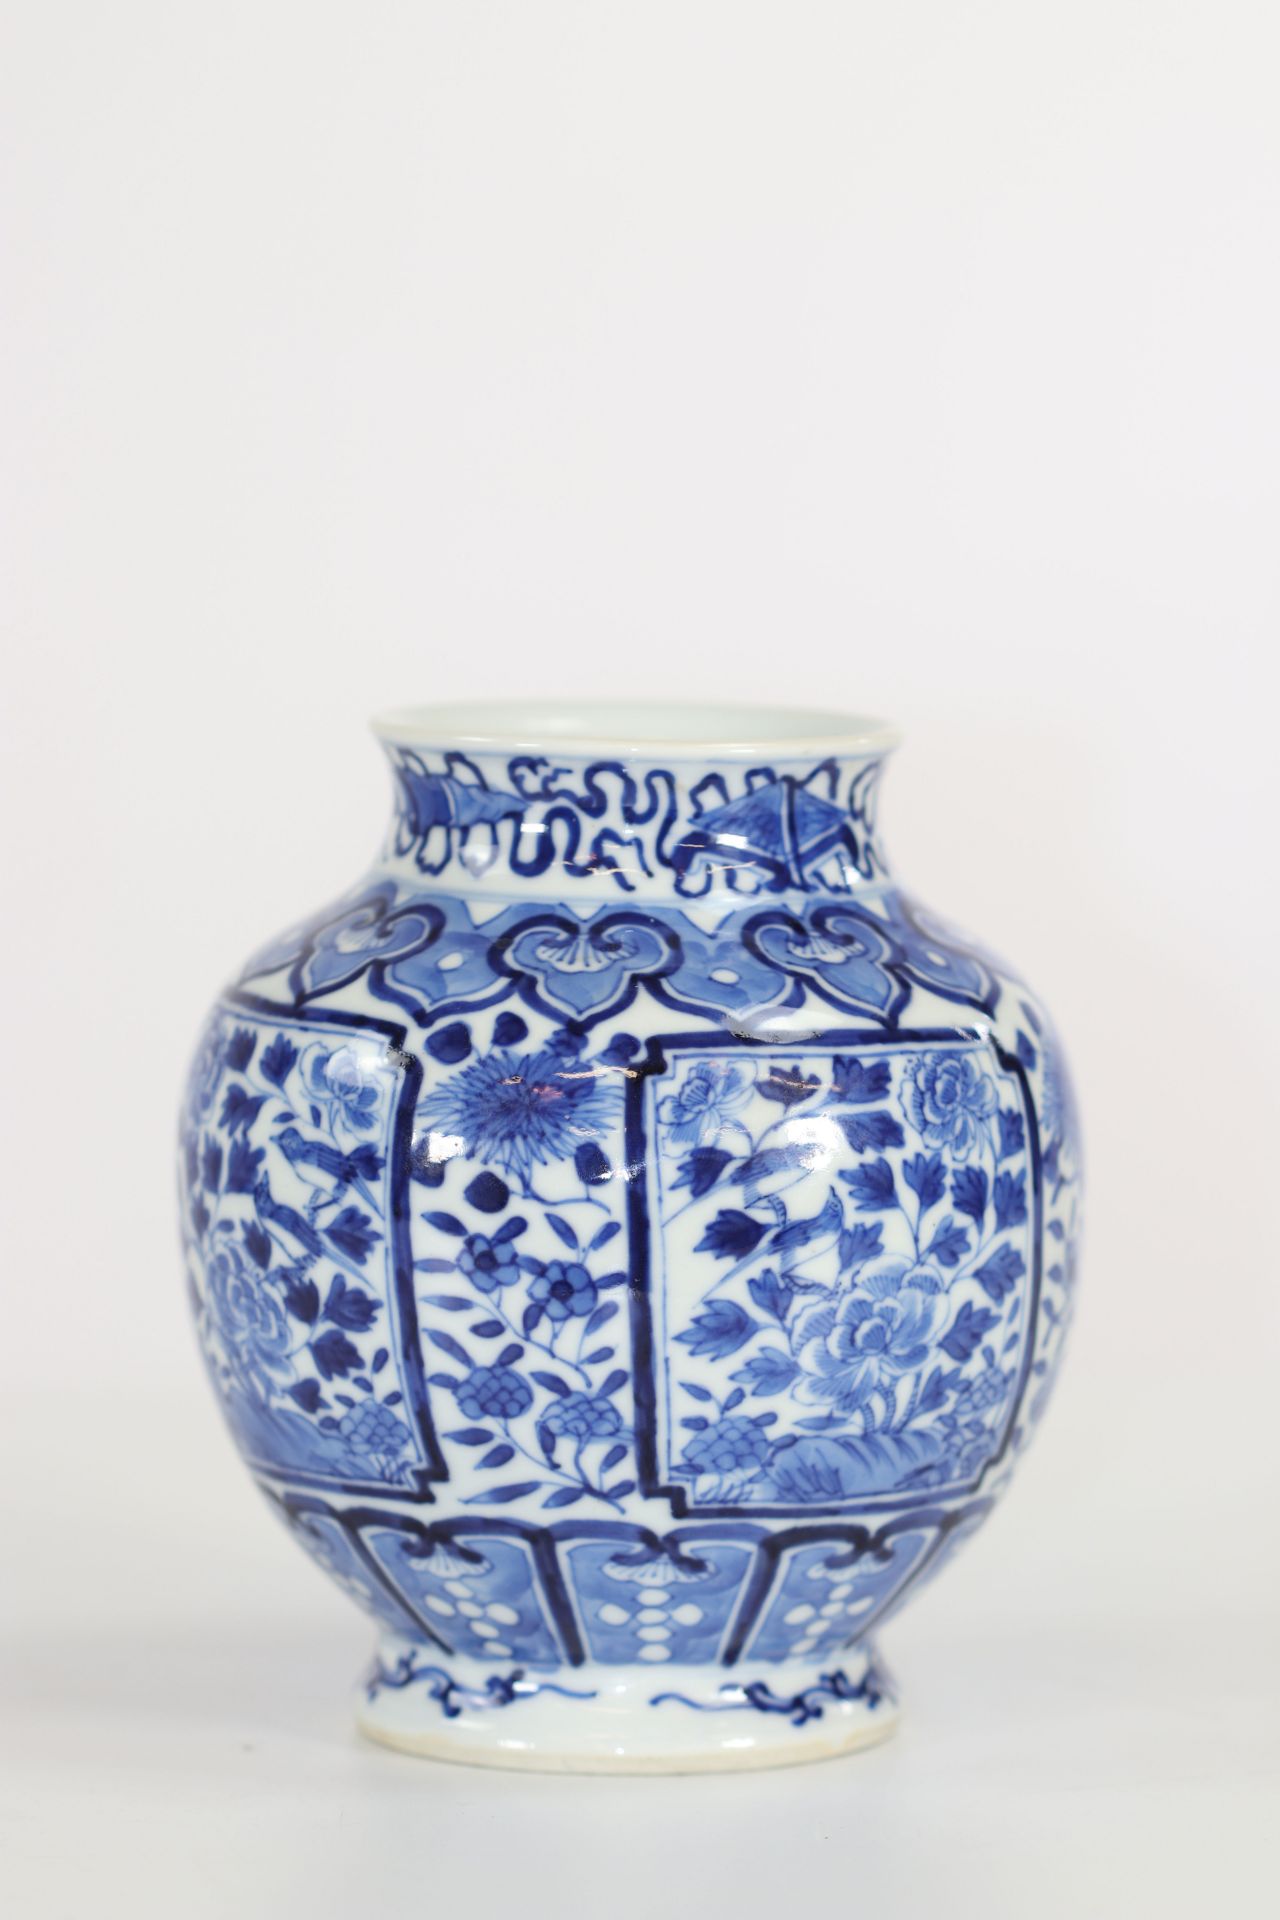 China blanc-bleu porcelain vase vegetable decor Qing dynasty 4 character mark - Image 3 of 4